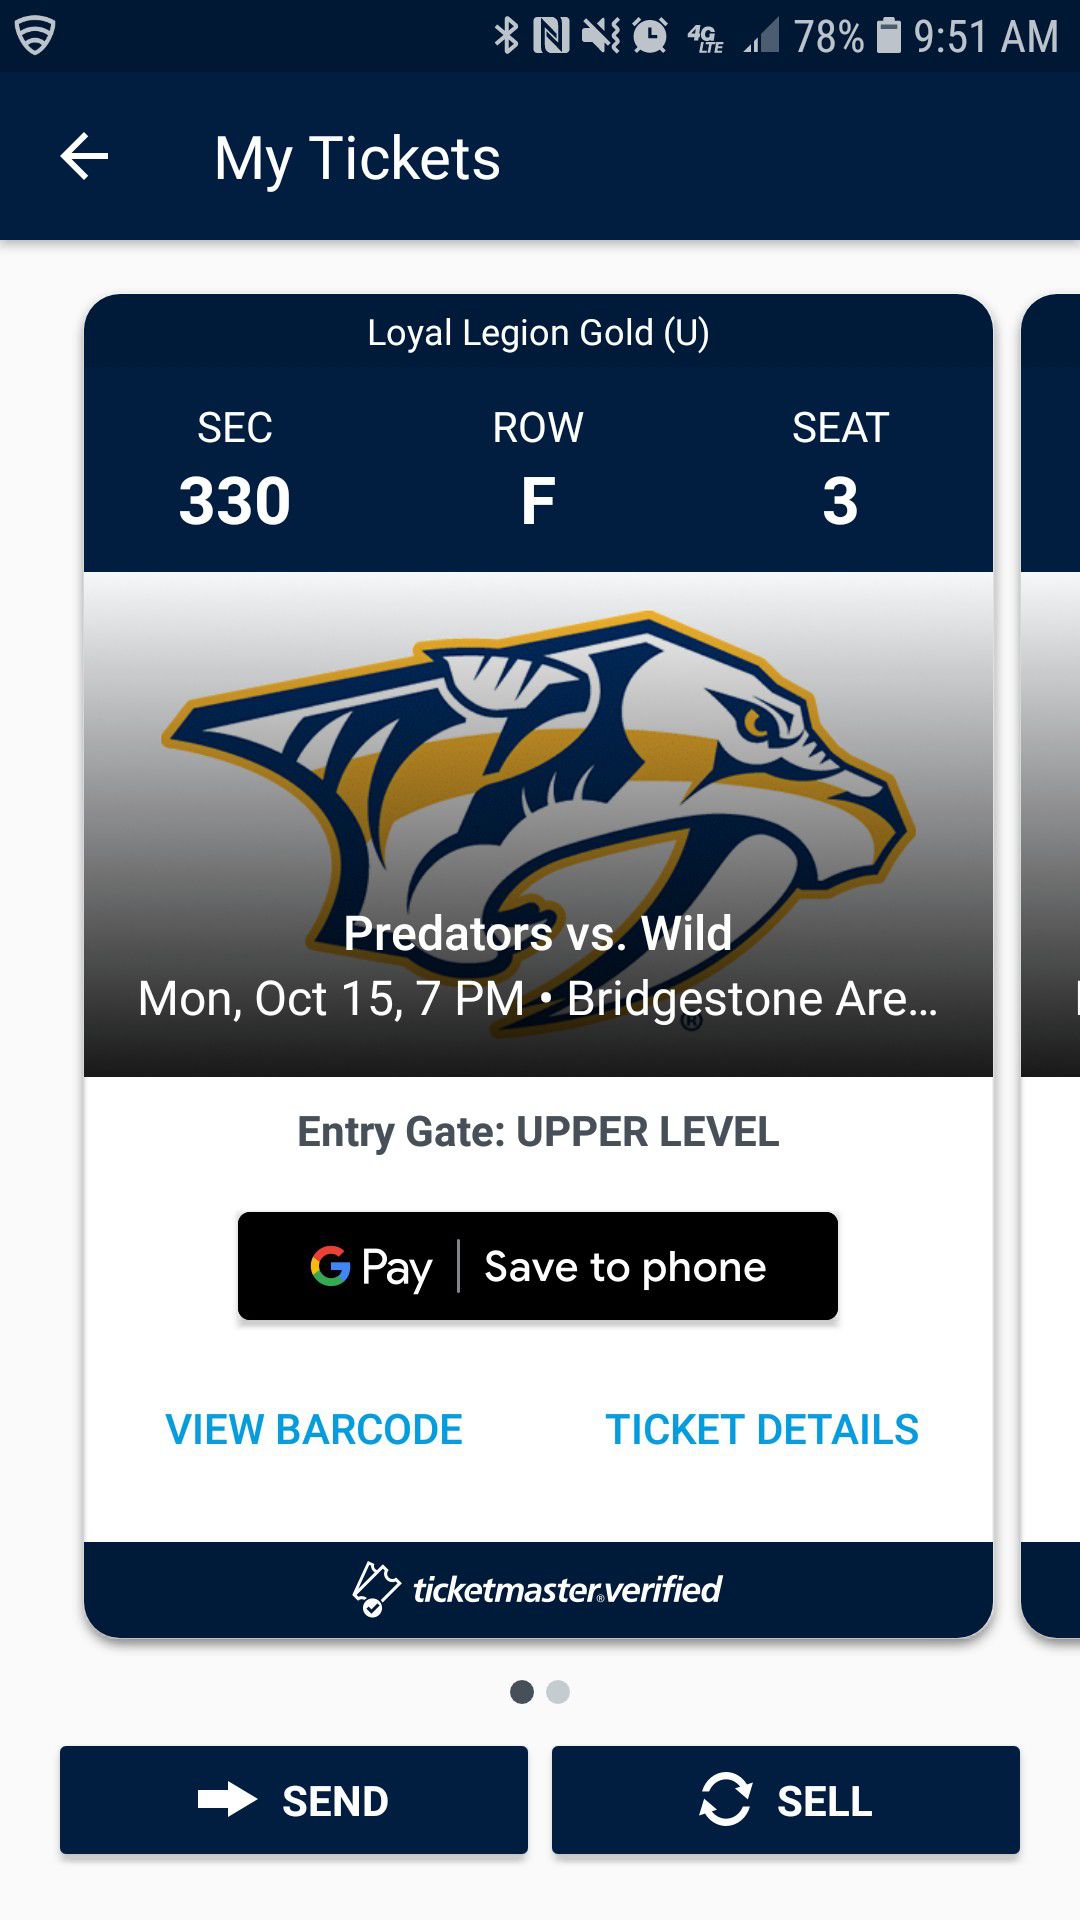 Predators vs Wild tickets for tonight, 10/15